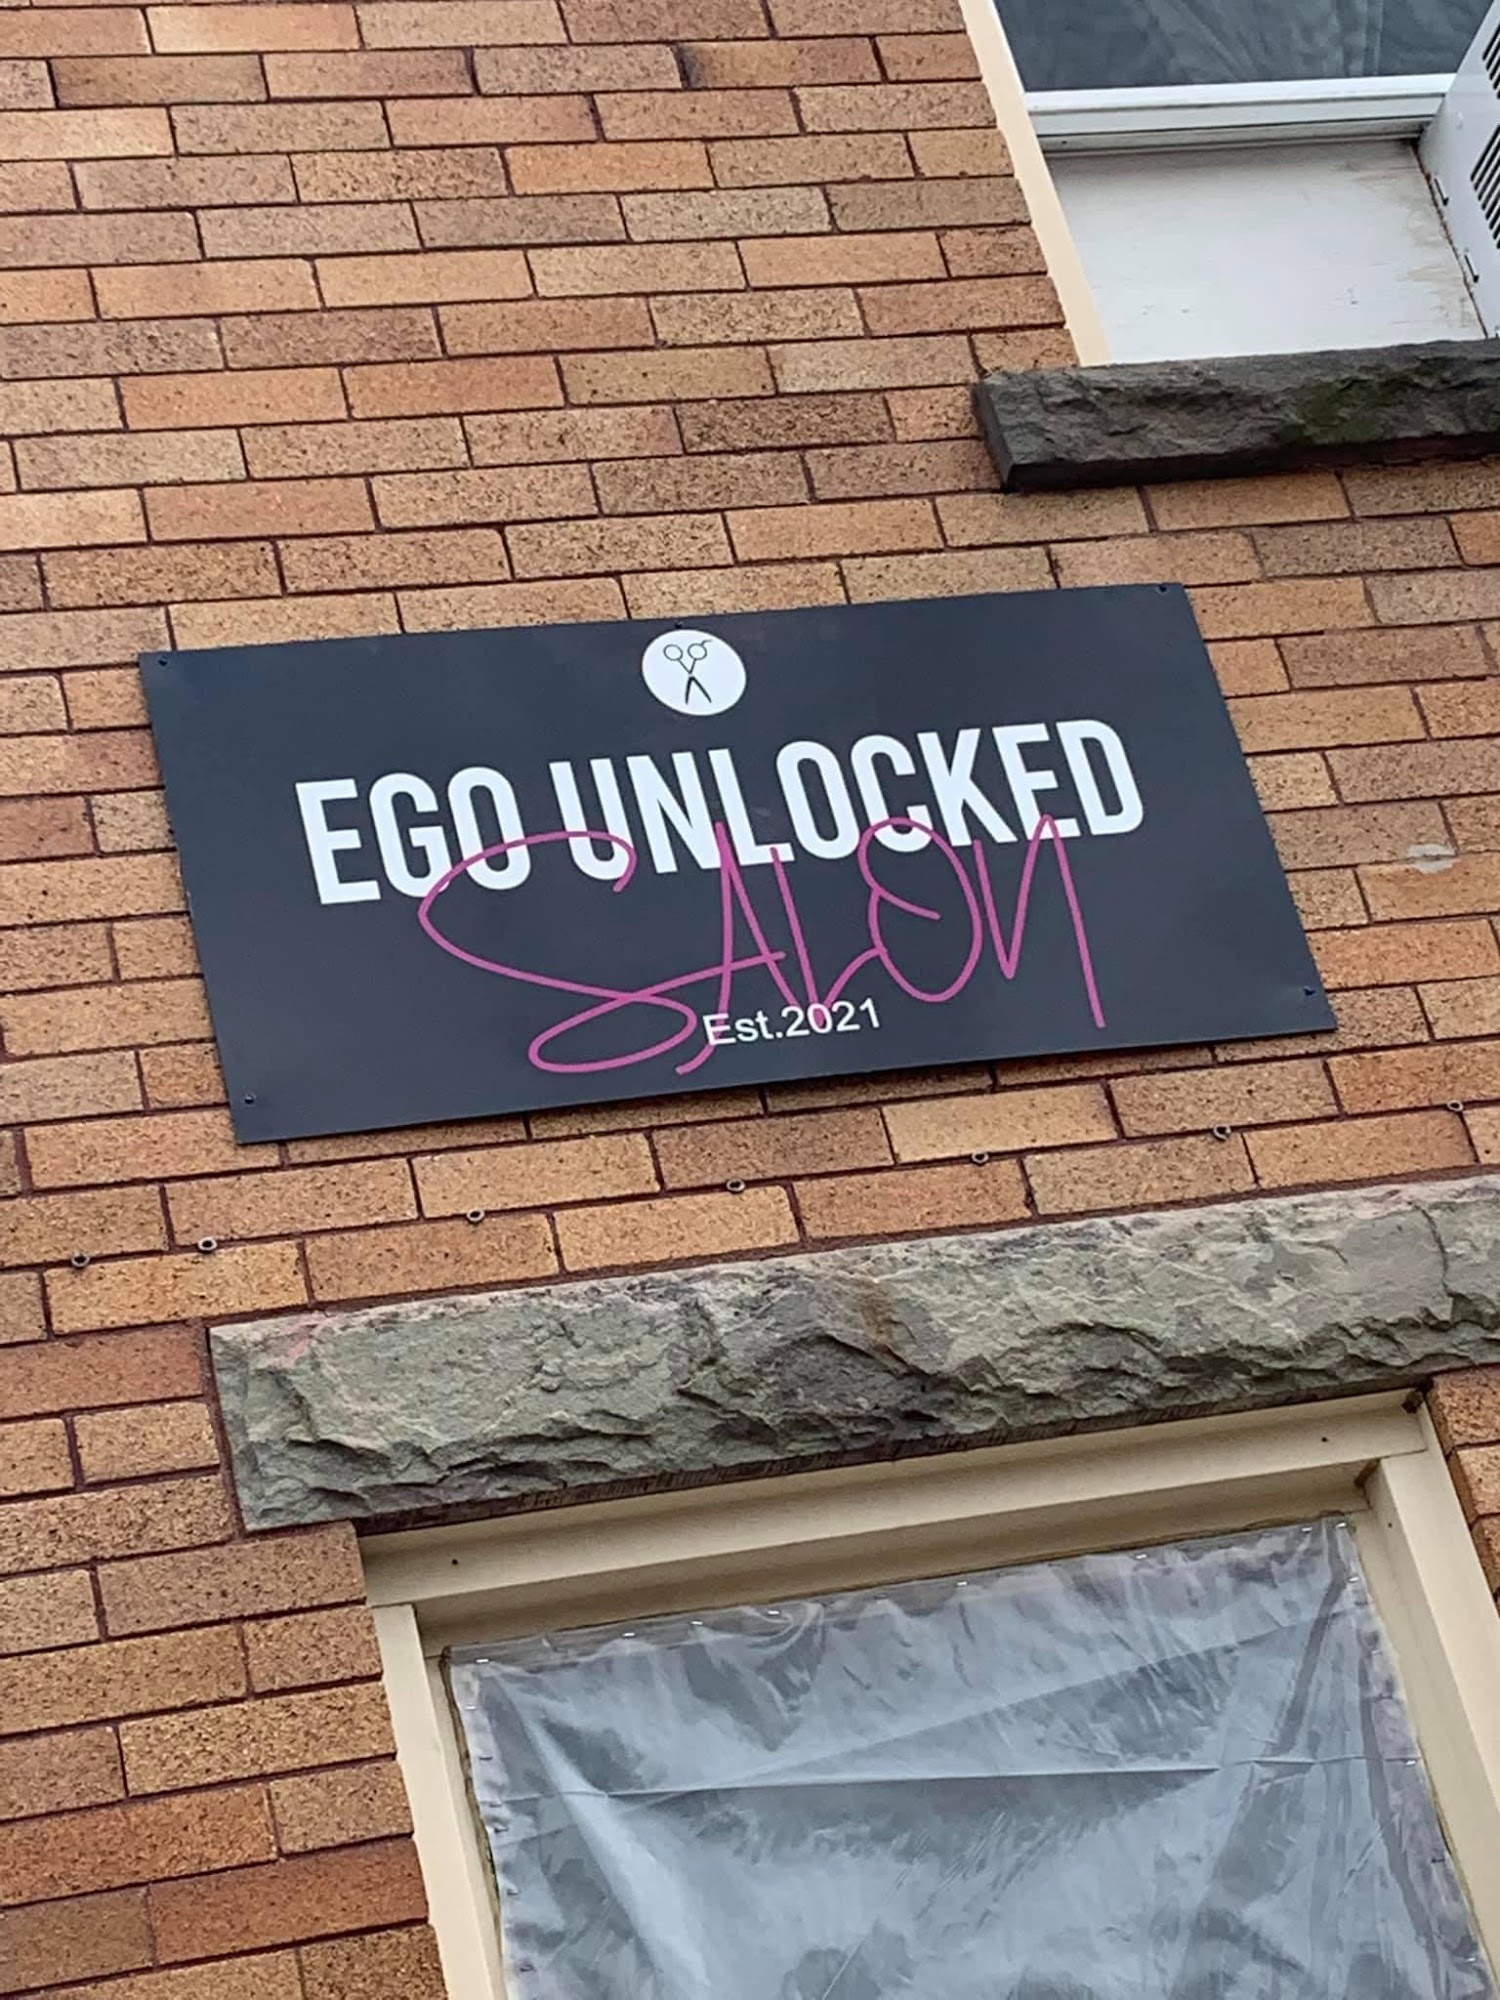 Ego Unlocked Salon 213 S Market St, Galion Ohio 44833